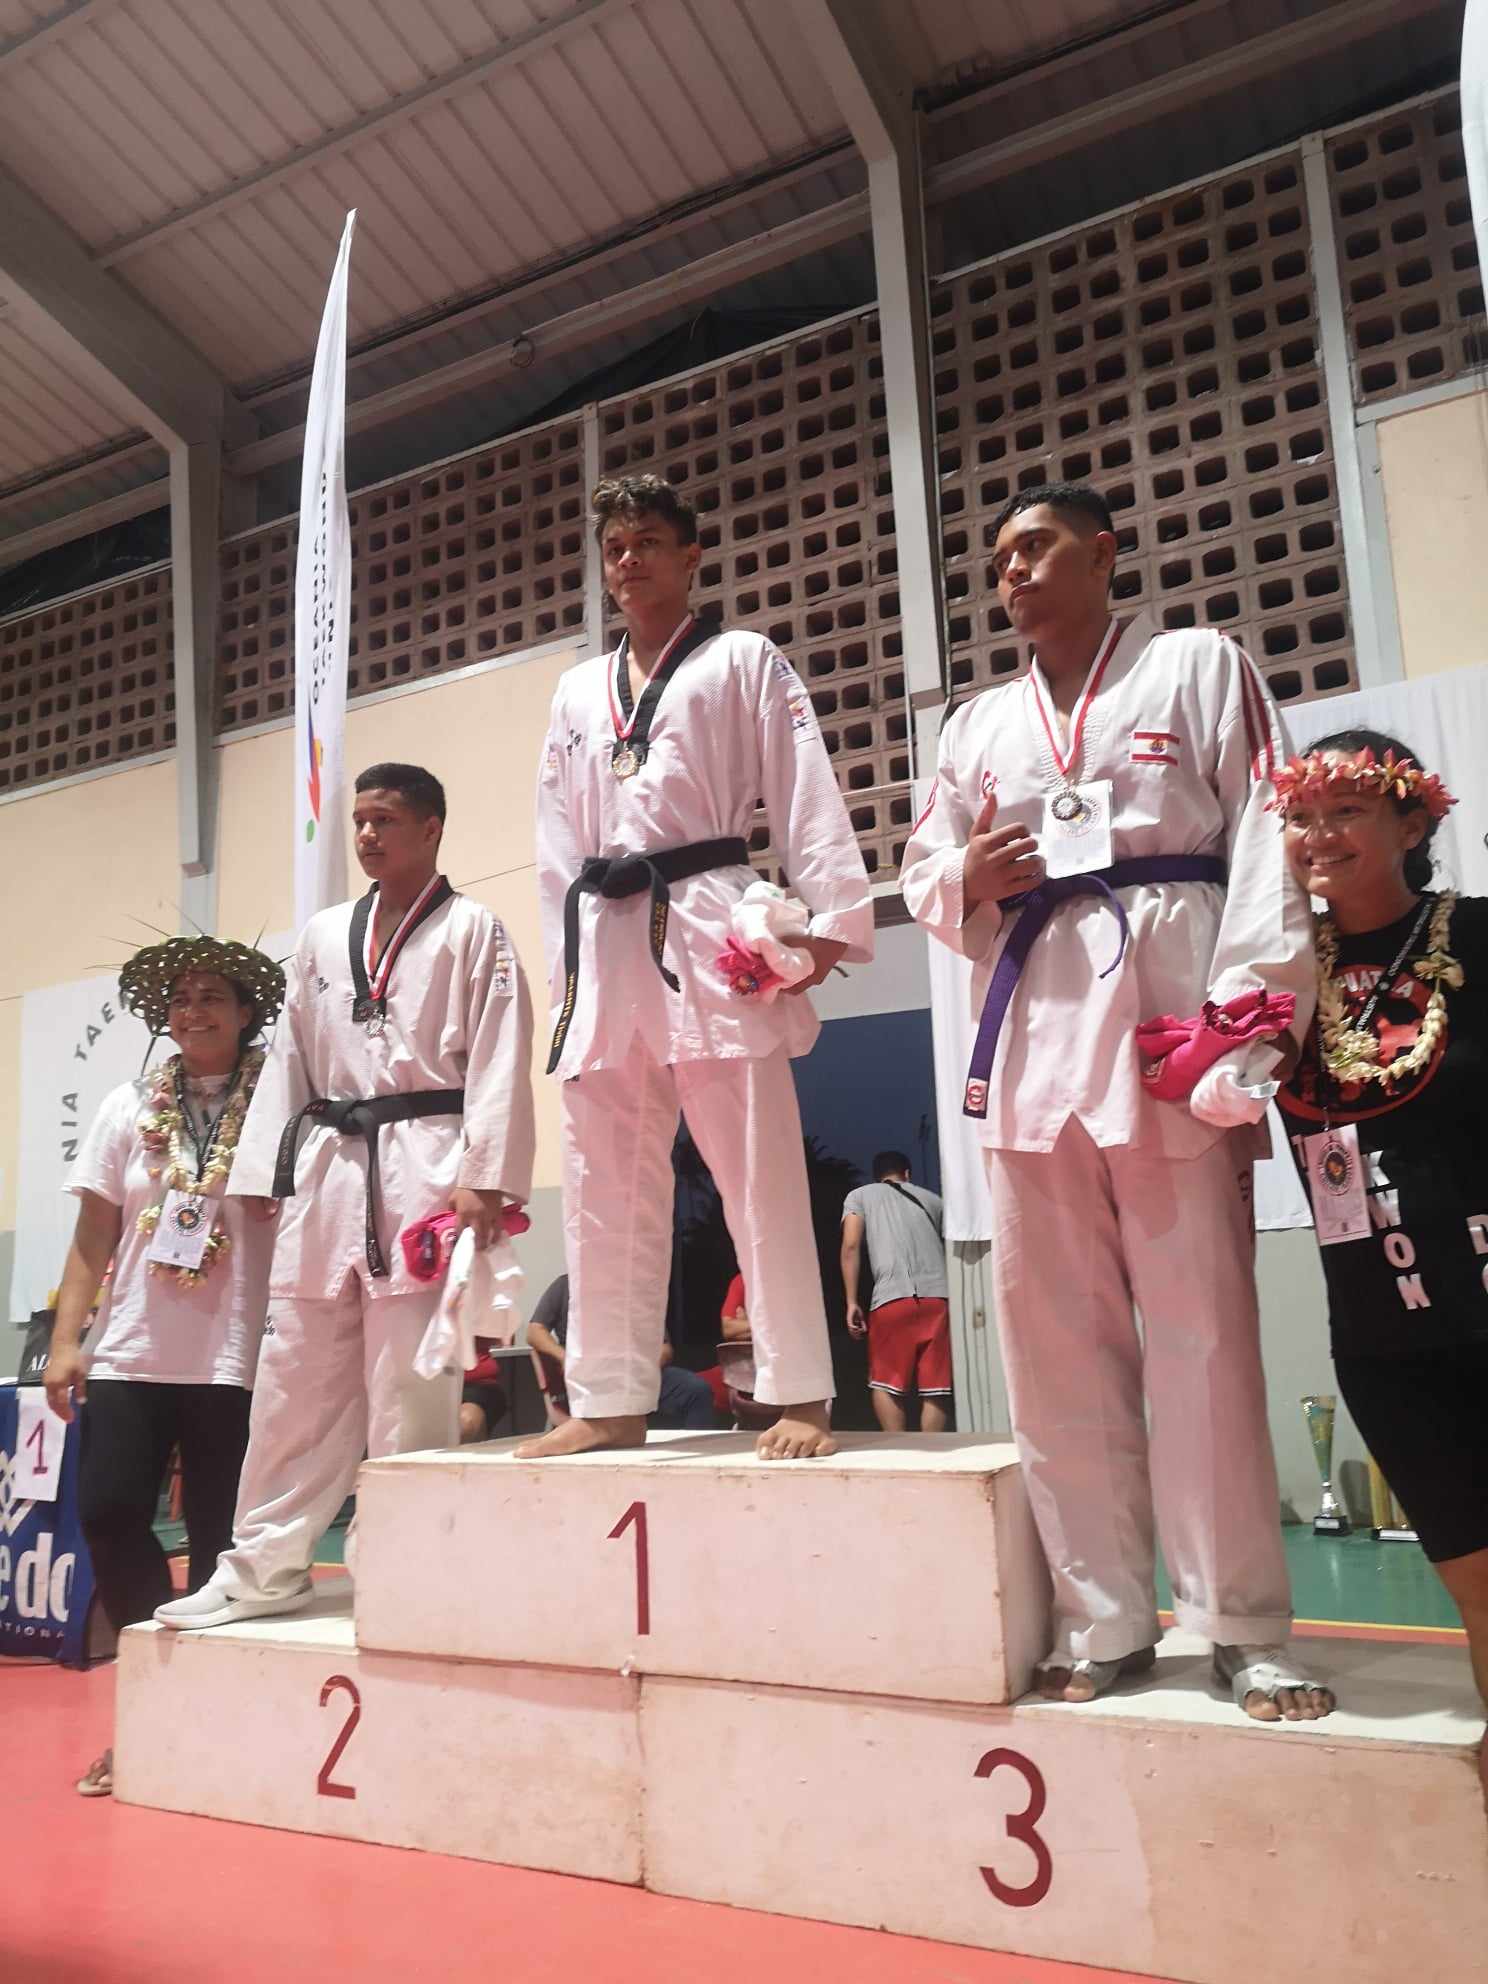 Le podium des +78kg Hommes au taekwondo.